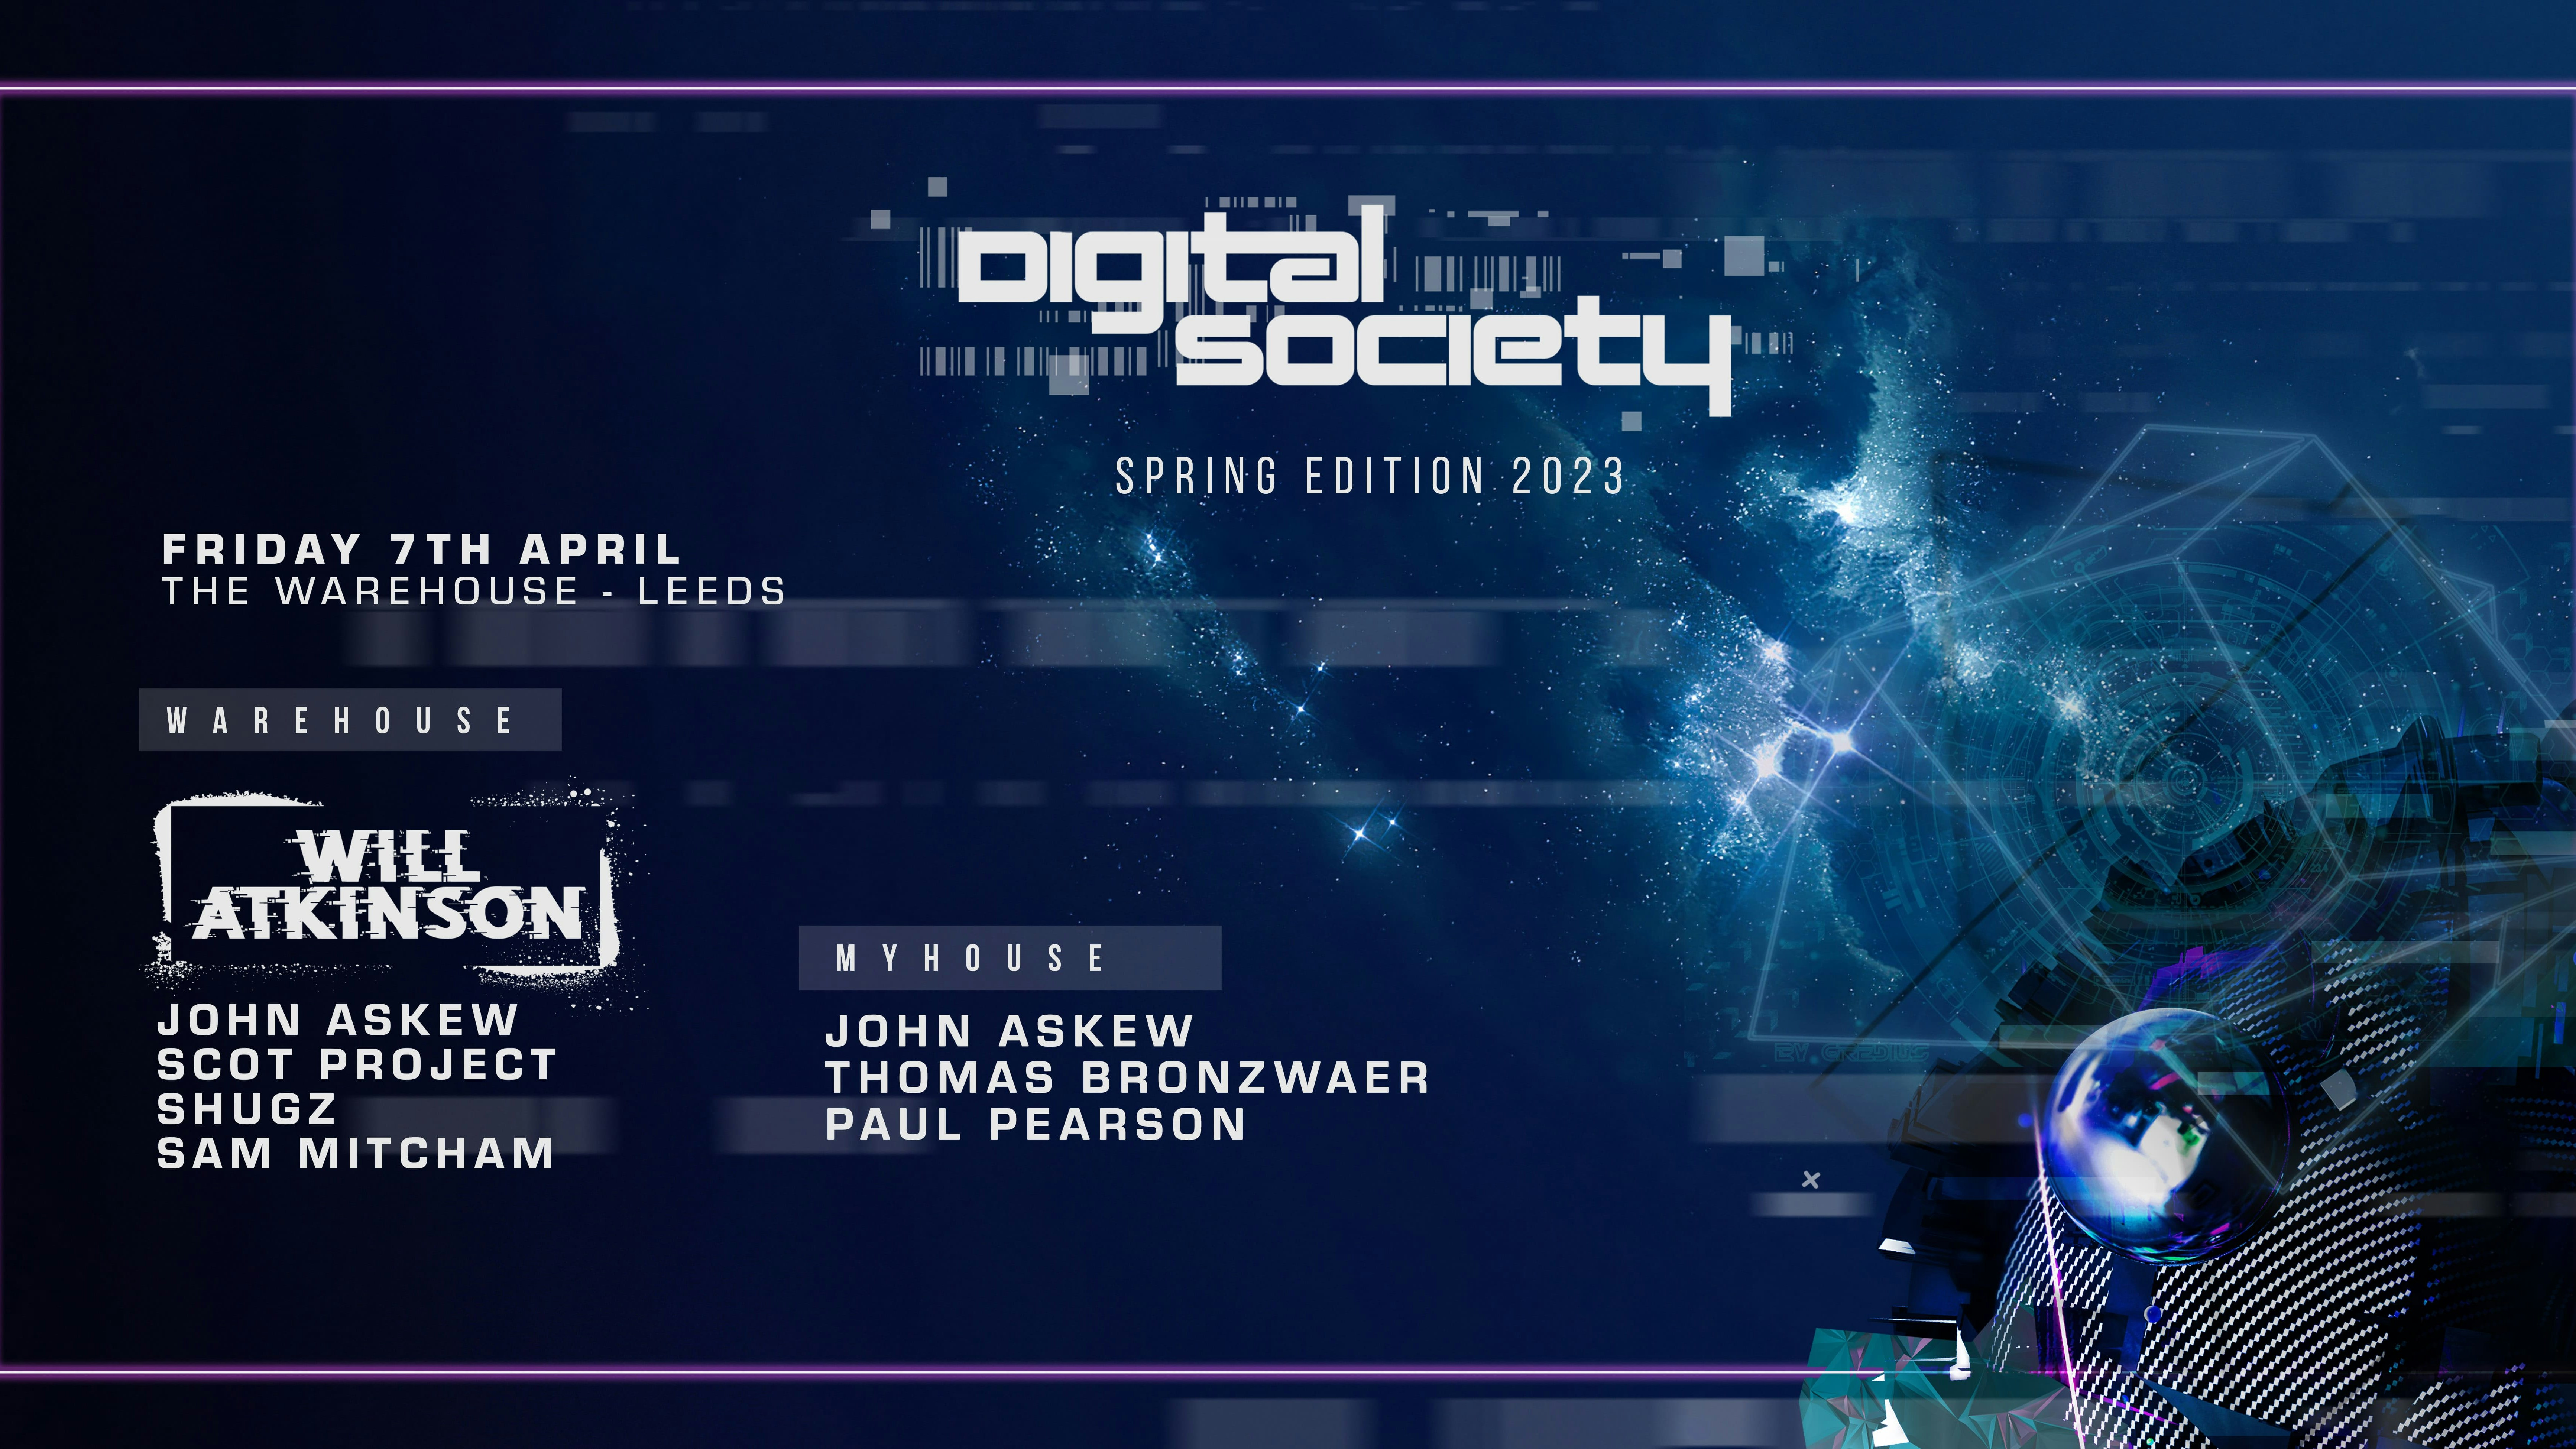 Digital Society 2023: spring edition